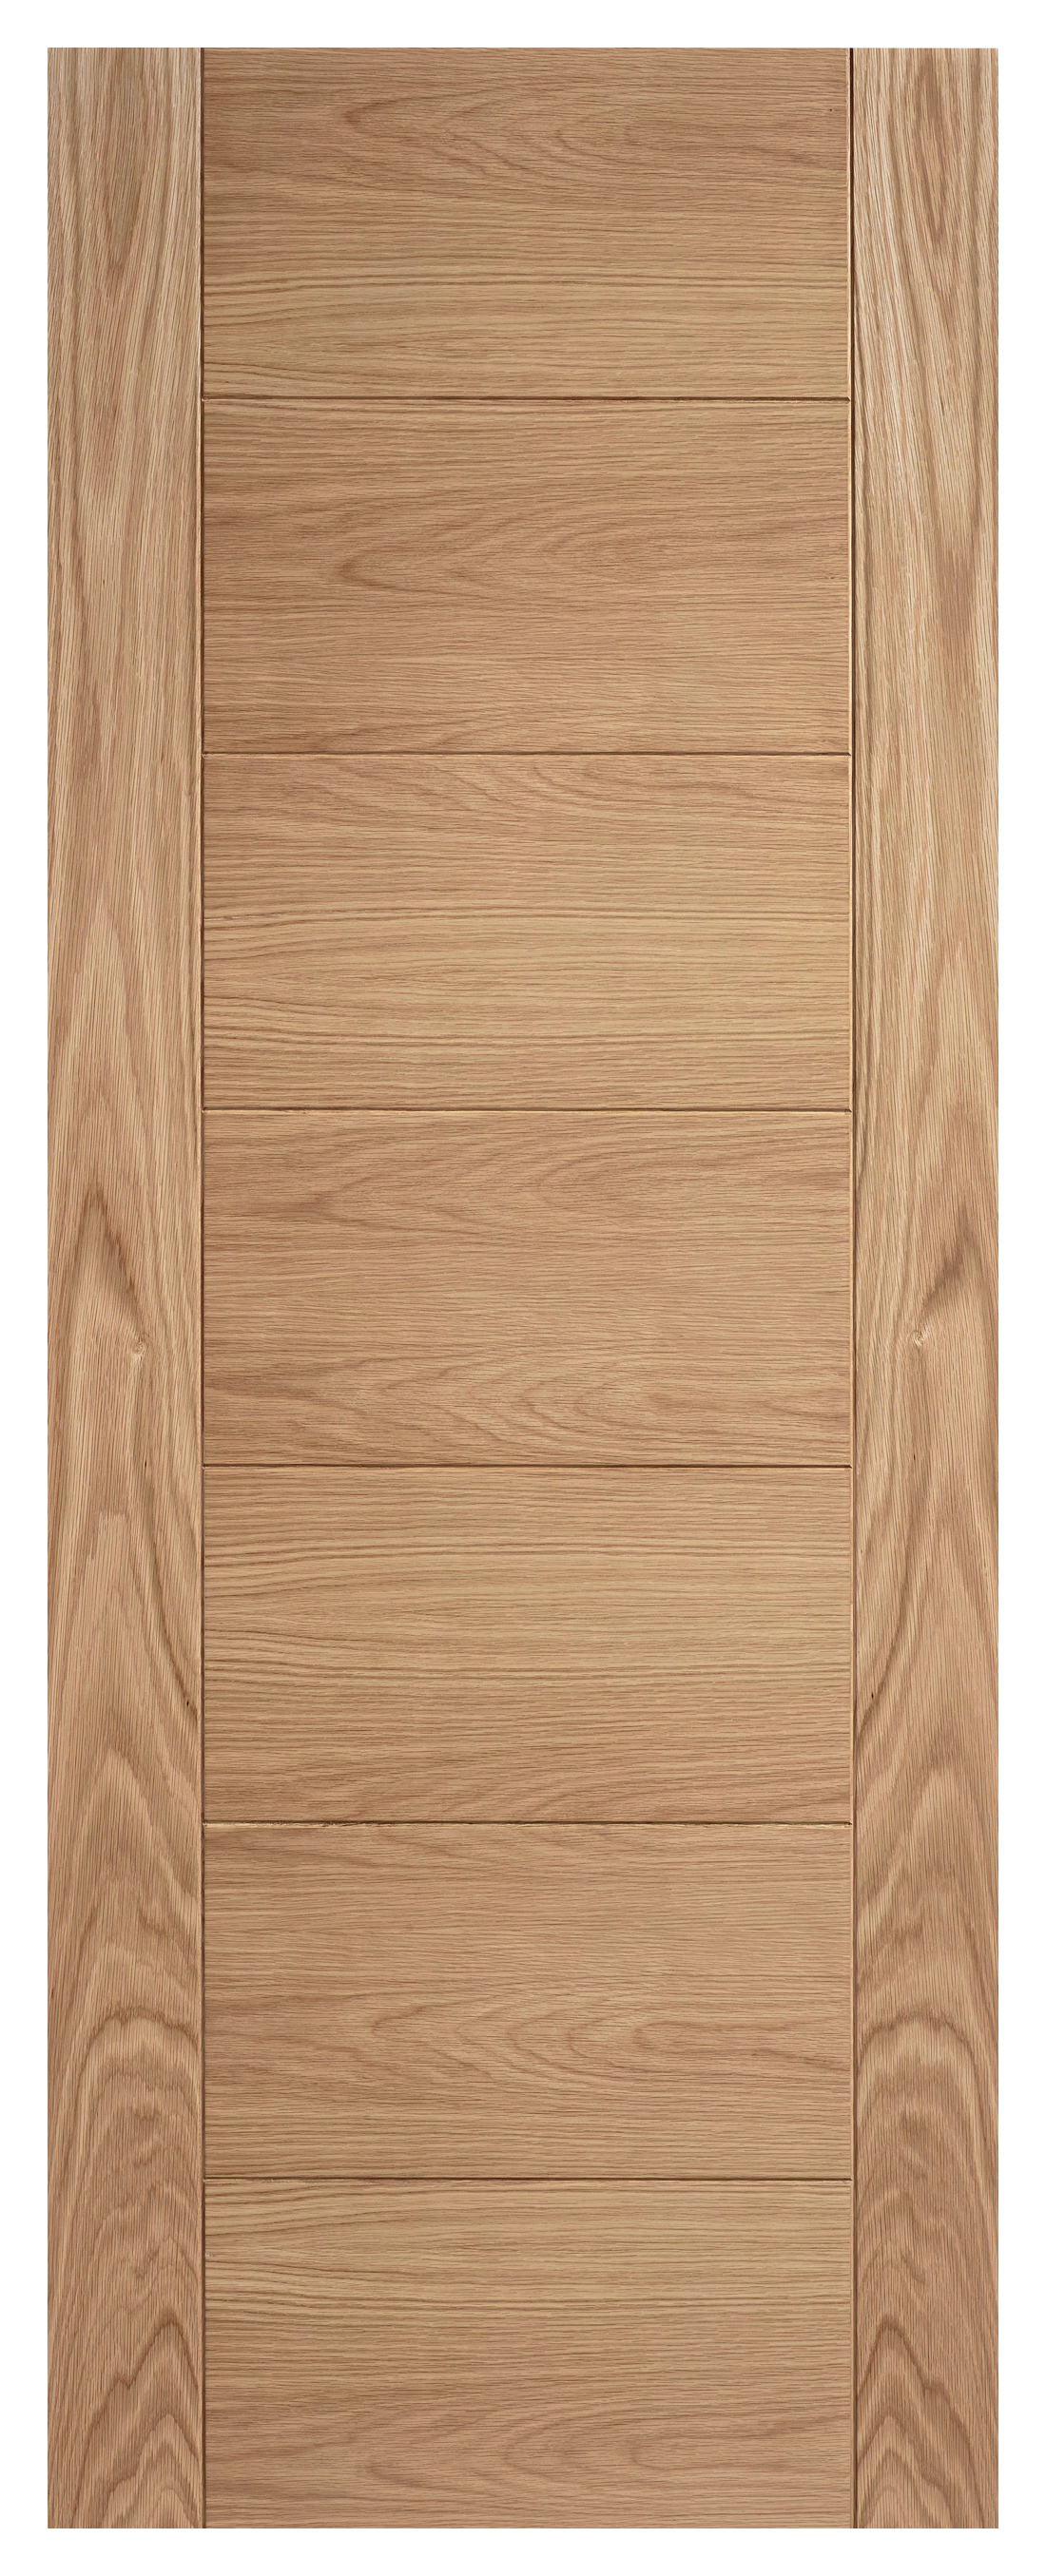 Image of LPD Internal Carini 7 Panel Unfinished Oak FD30 Fire Door - 686 x 1981mm